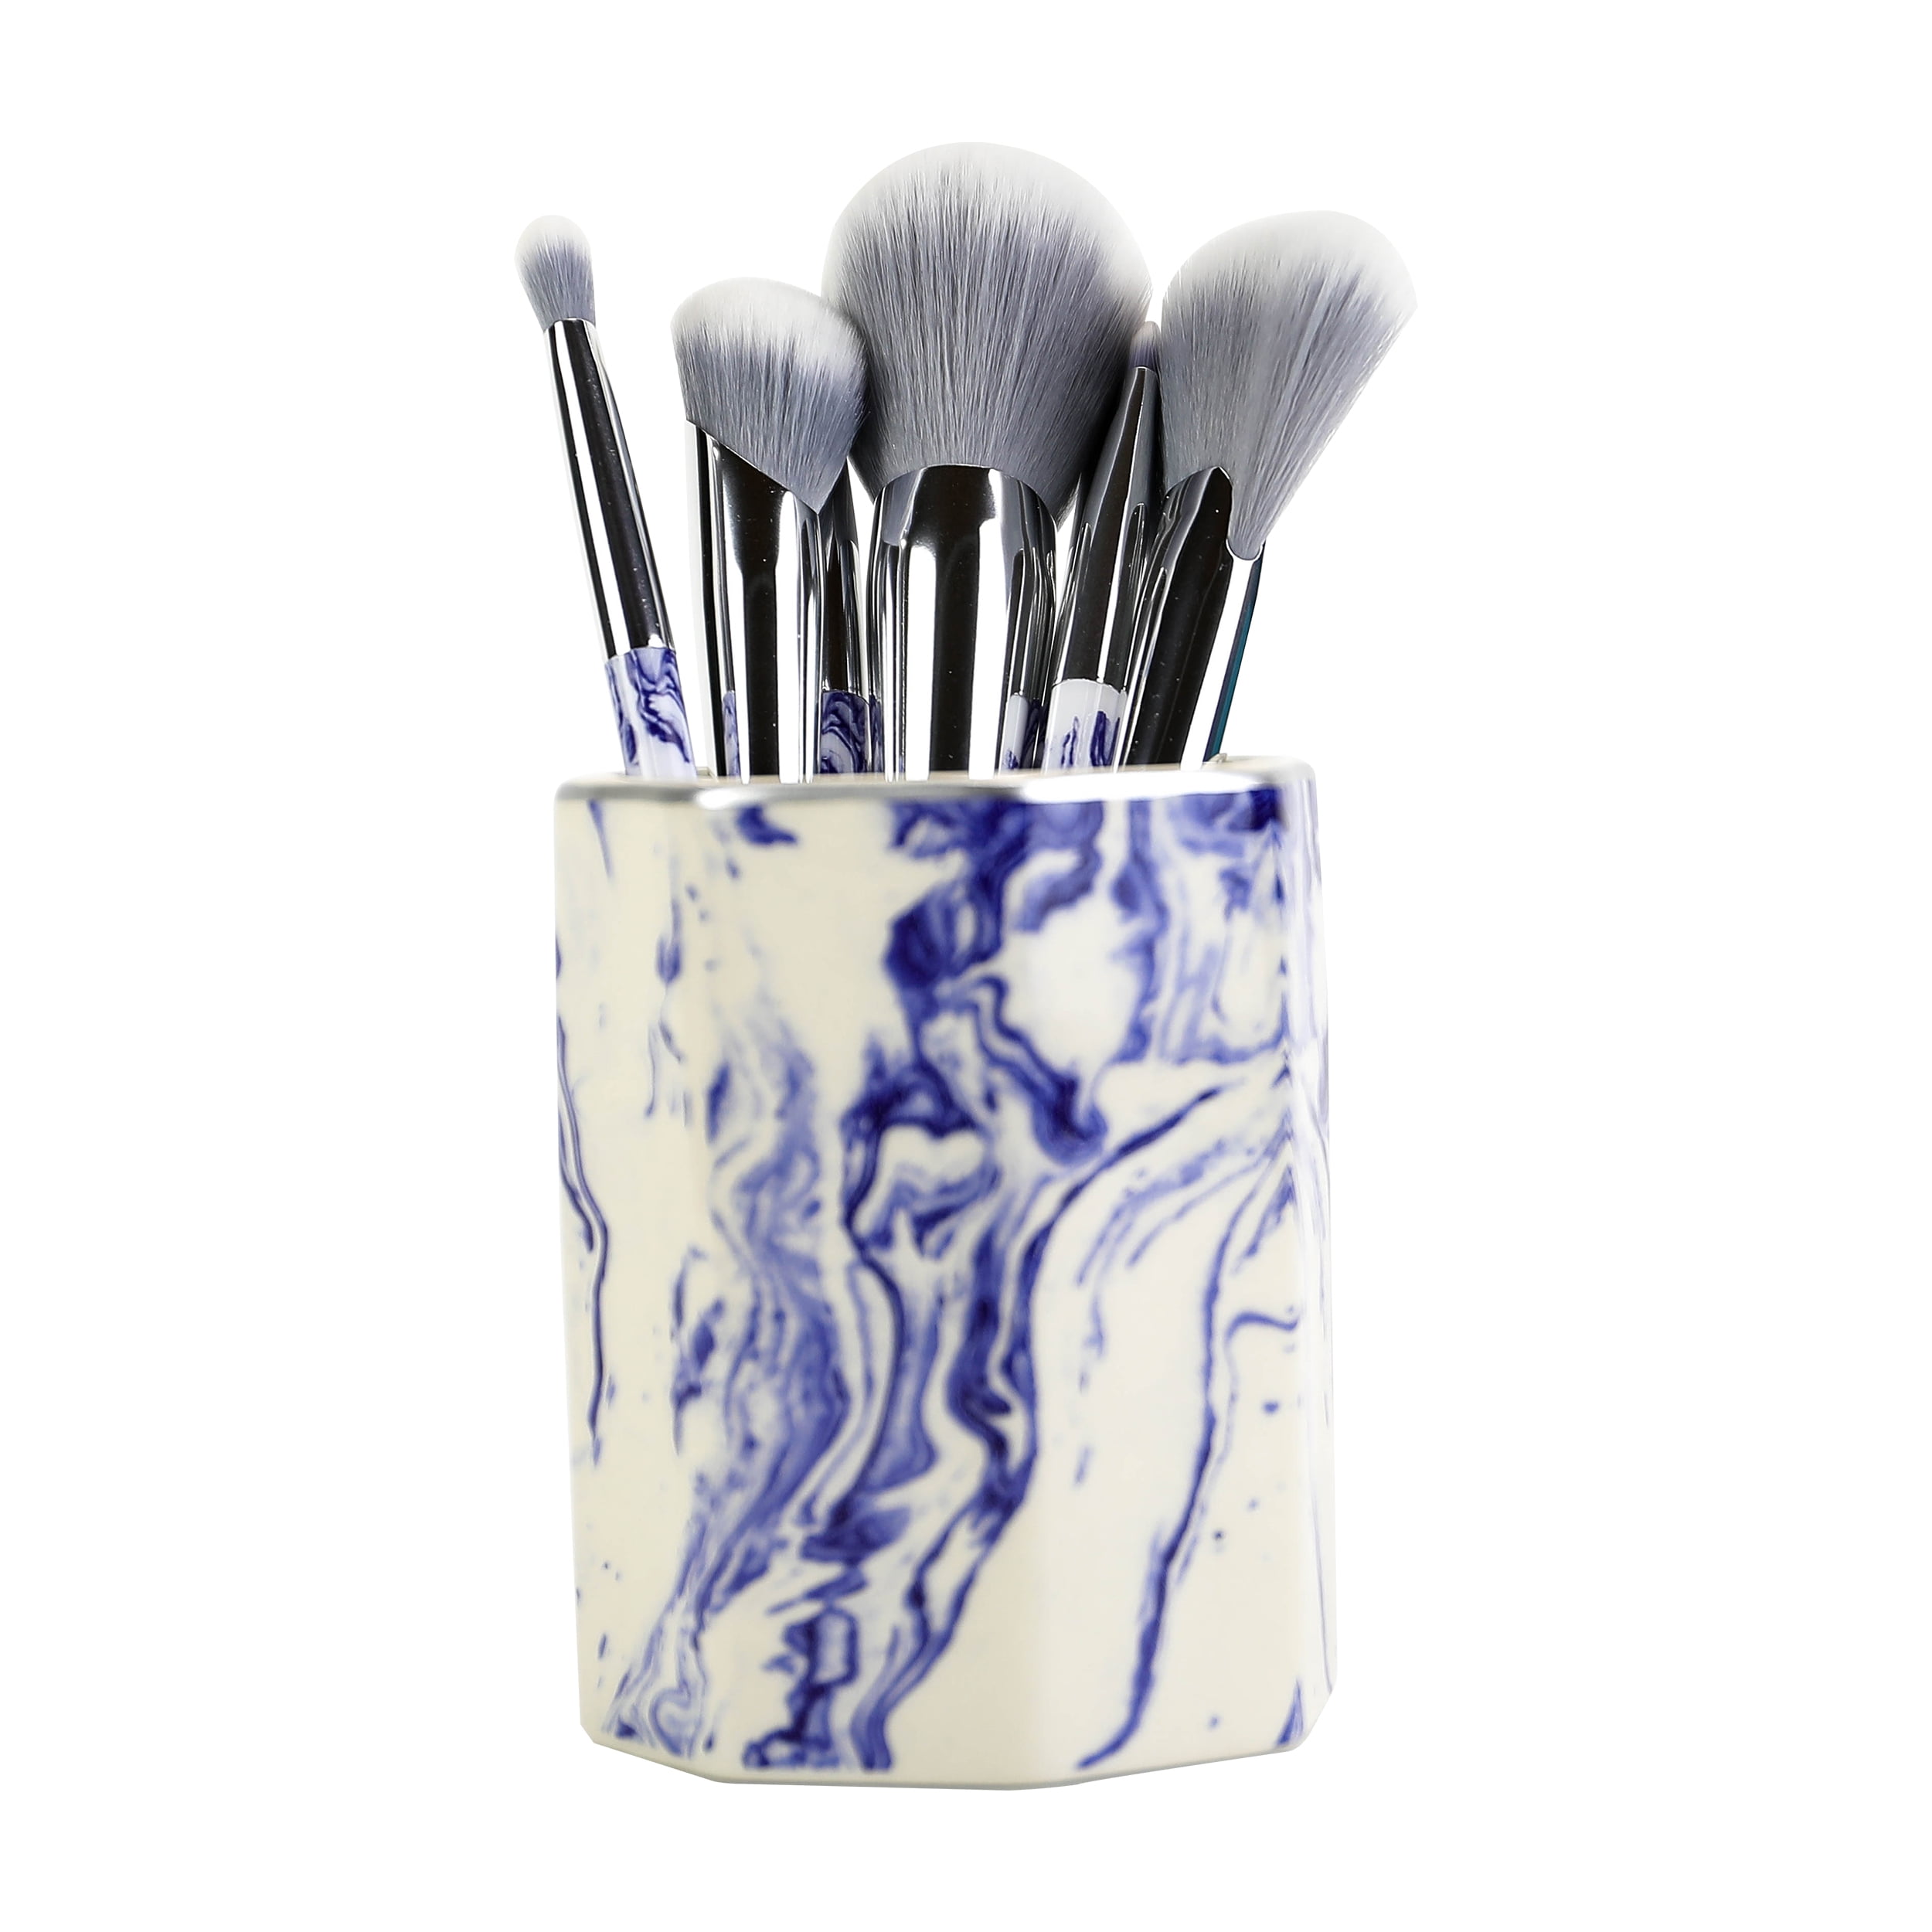 Unbrand Premium Classic Makeup Brush Gift Set with Navy Ceramic Holder, 8 Piece Set